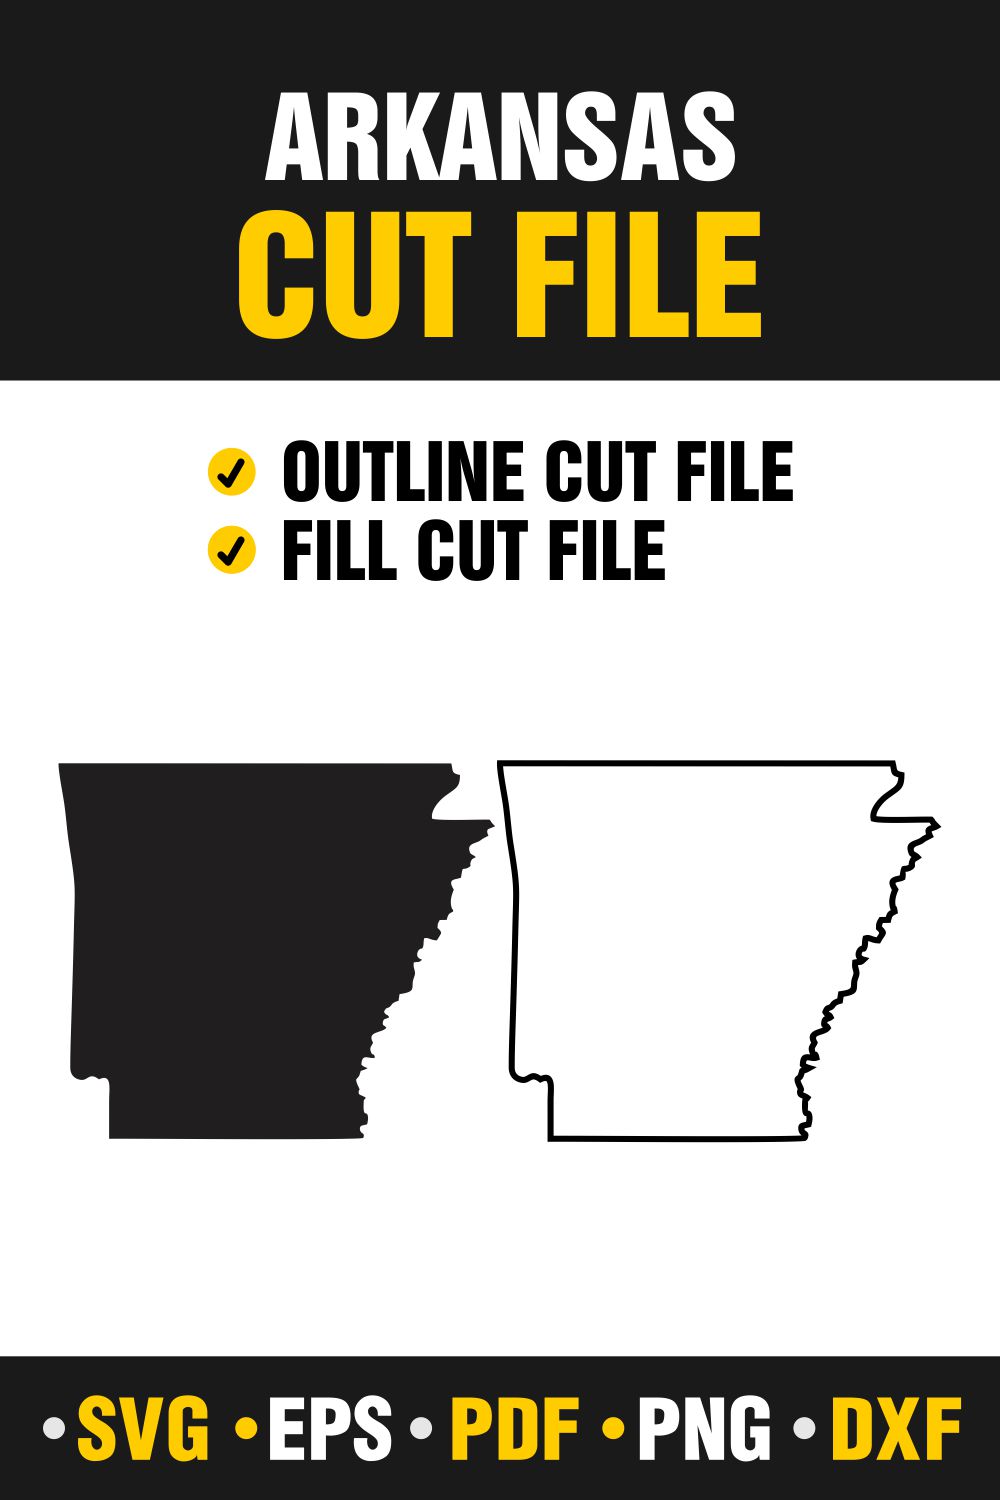 Arkansas SVG, PNG, PDF, EPS & DXF pinterest preview image.